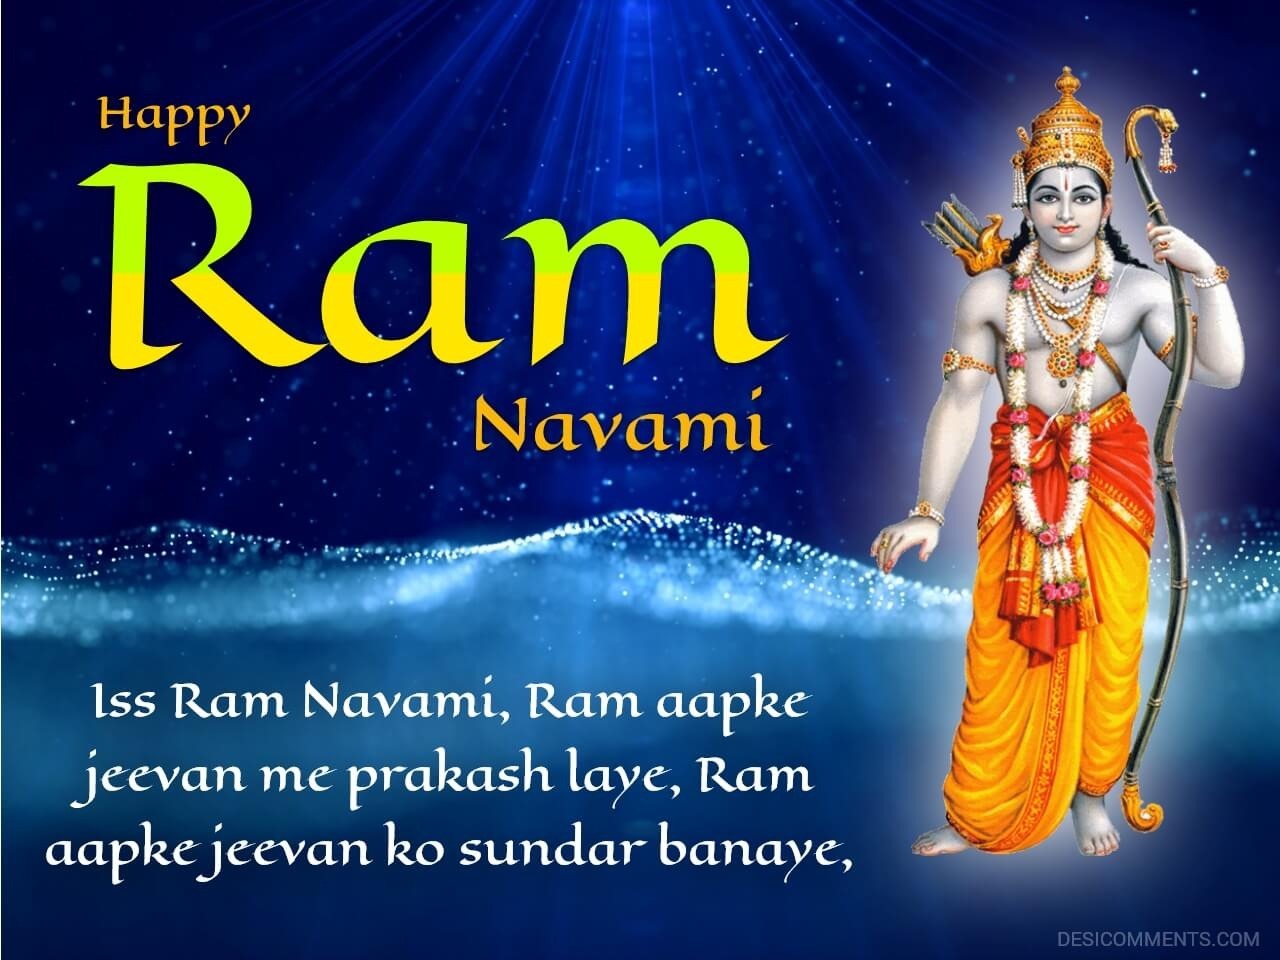 Happy Ram Navami Images | Ram Navami 2020 wishes: Photos, Rama Navami  WhatsApp & Facebook messages and Quotes